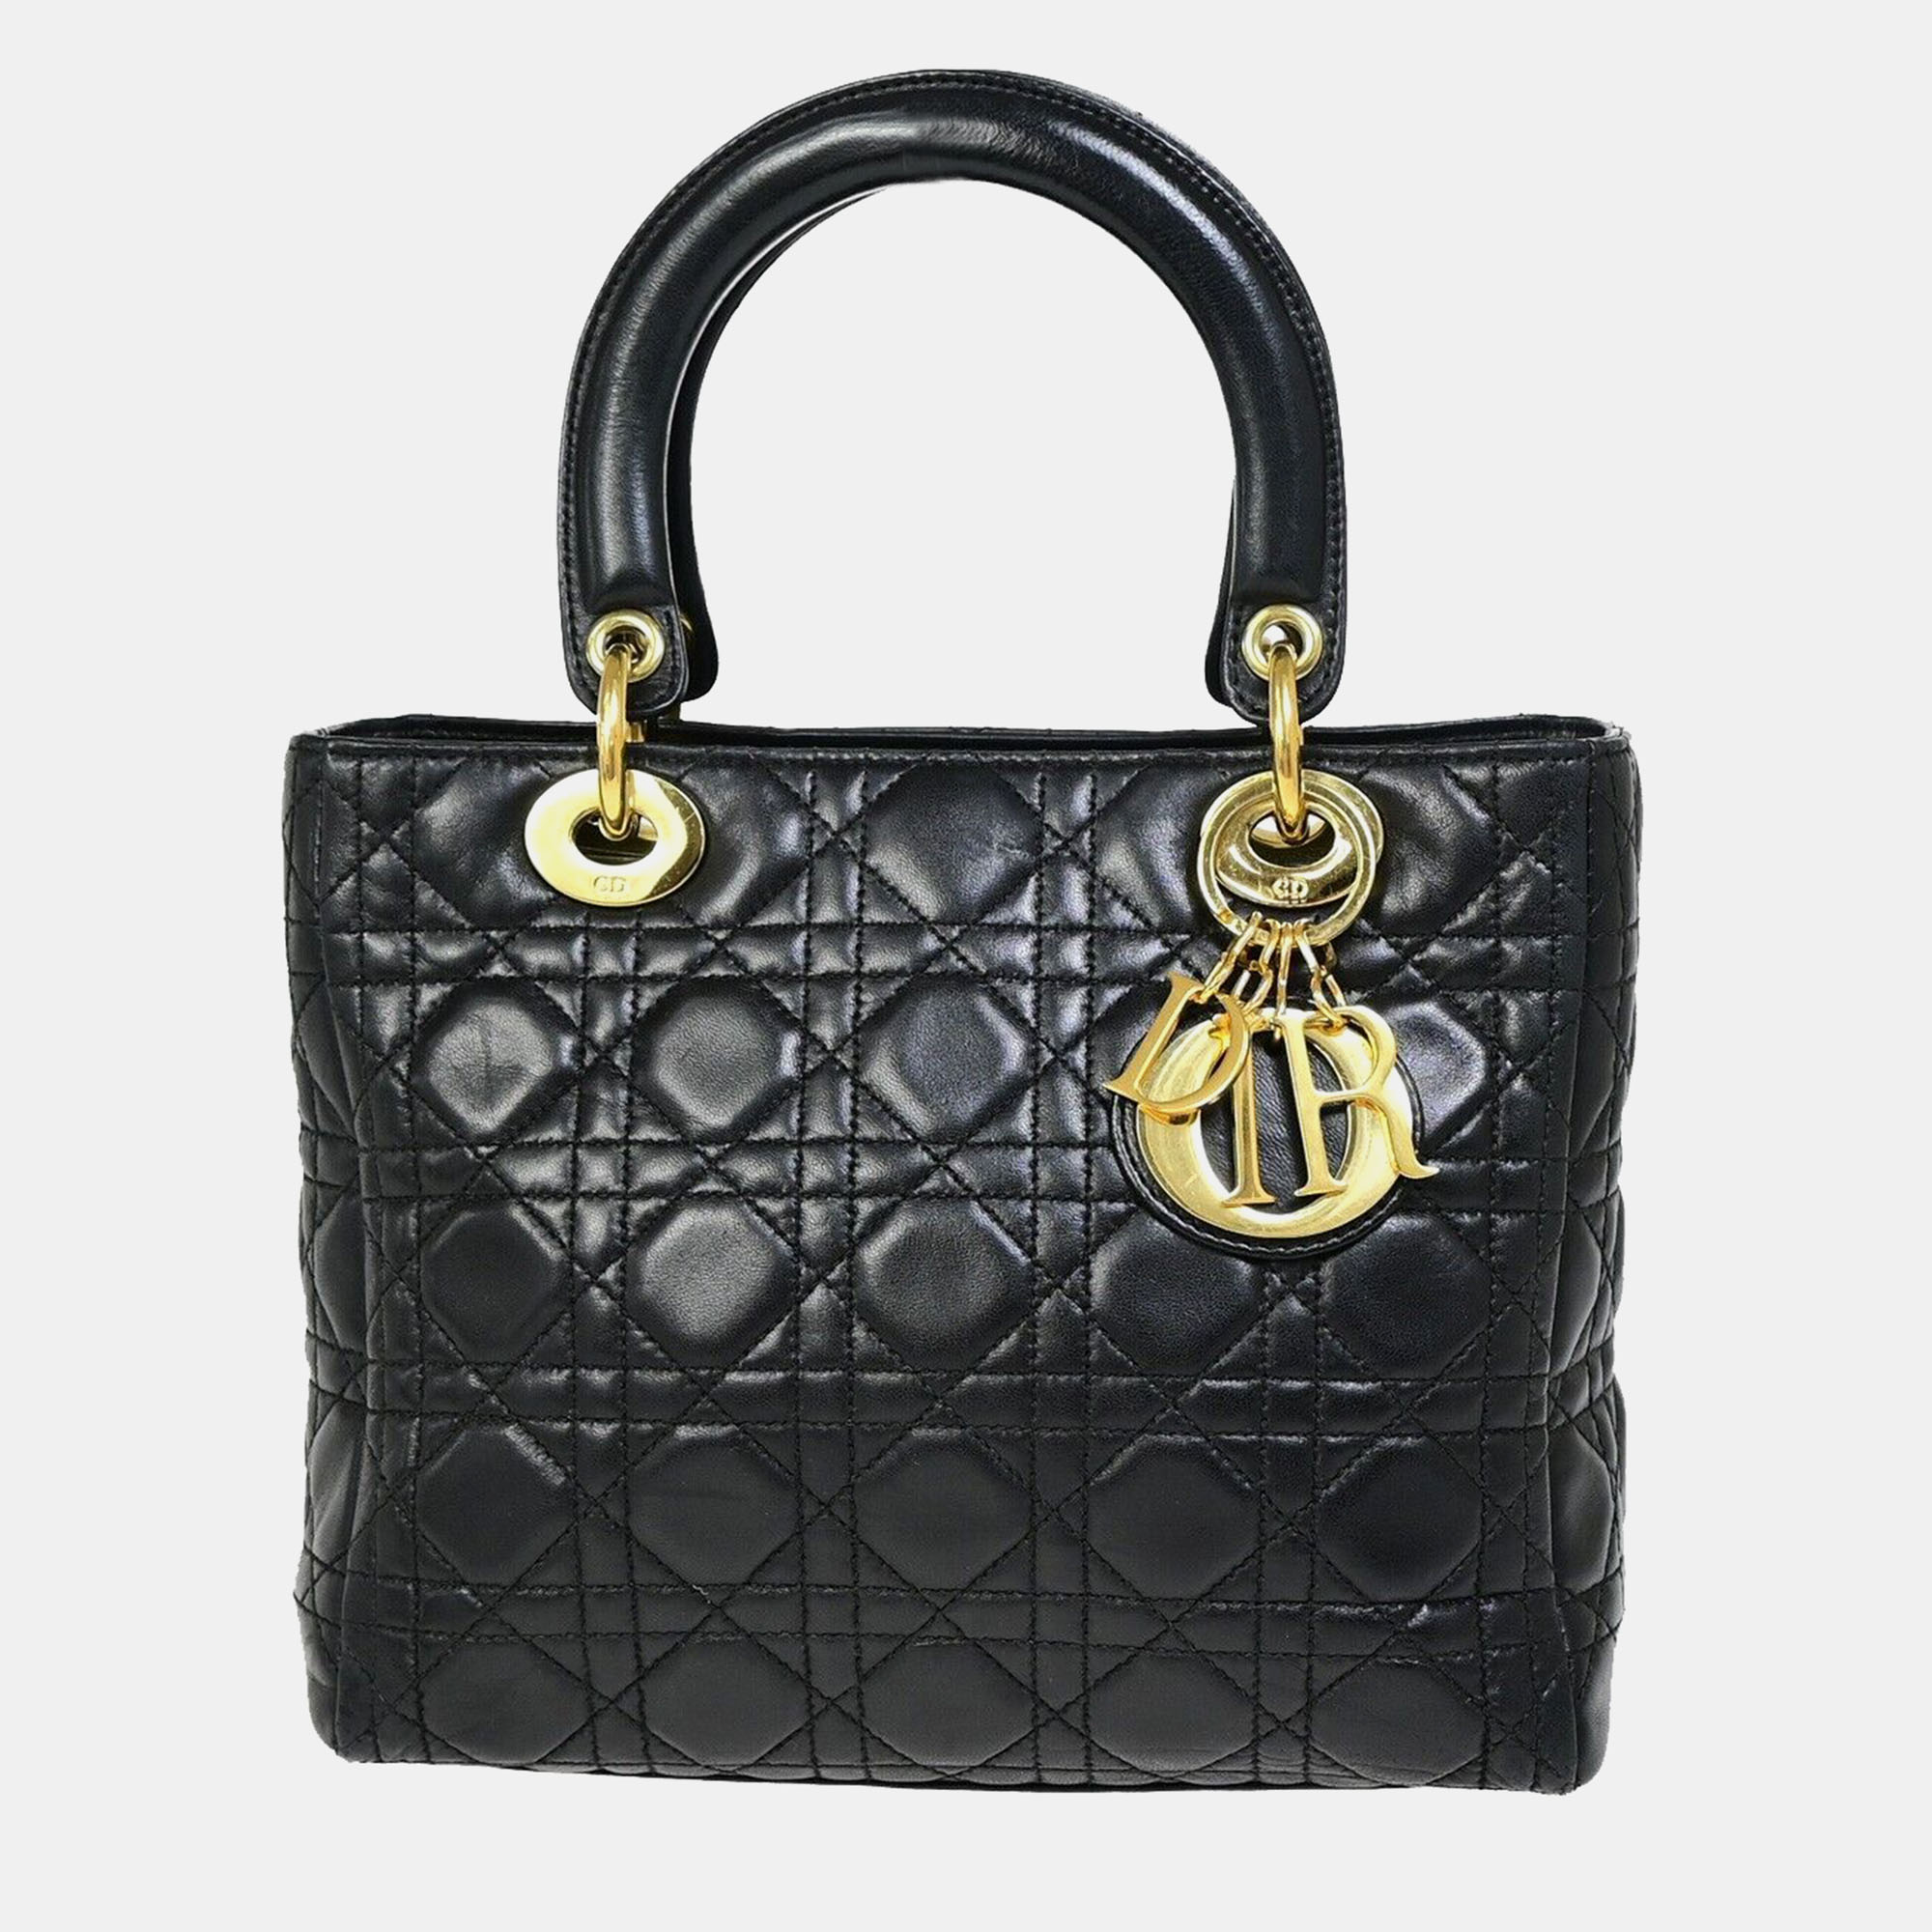 Dior black leather medium lady dior tote bag